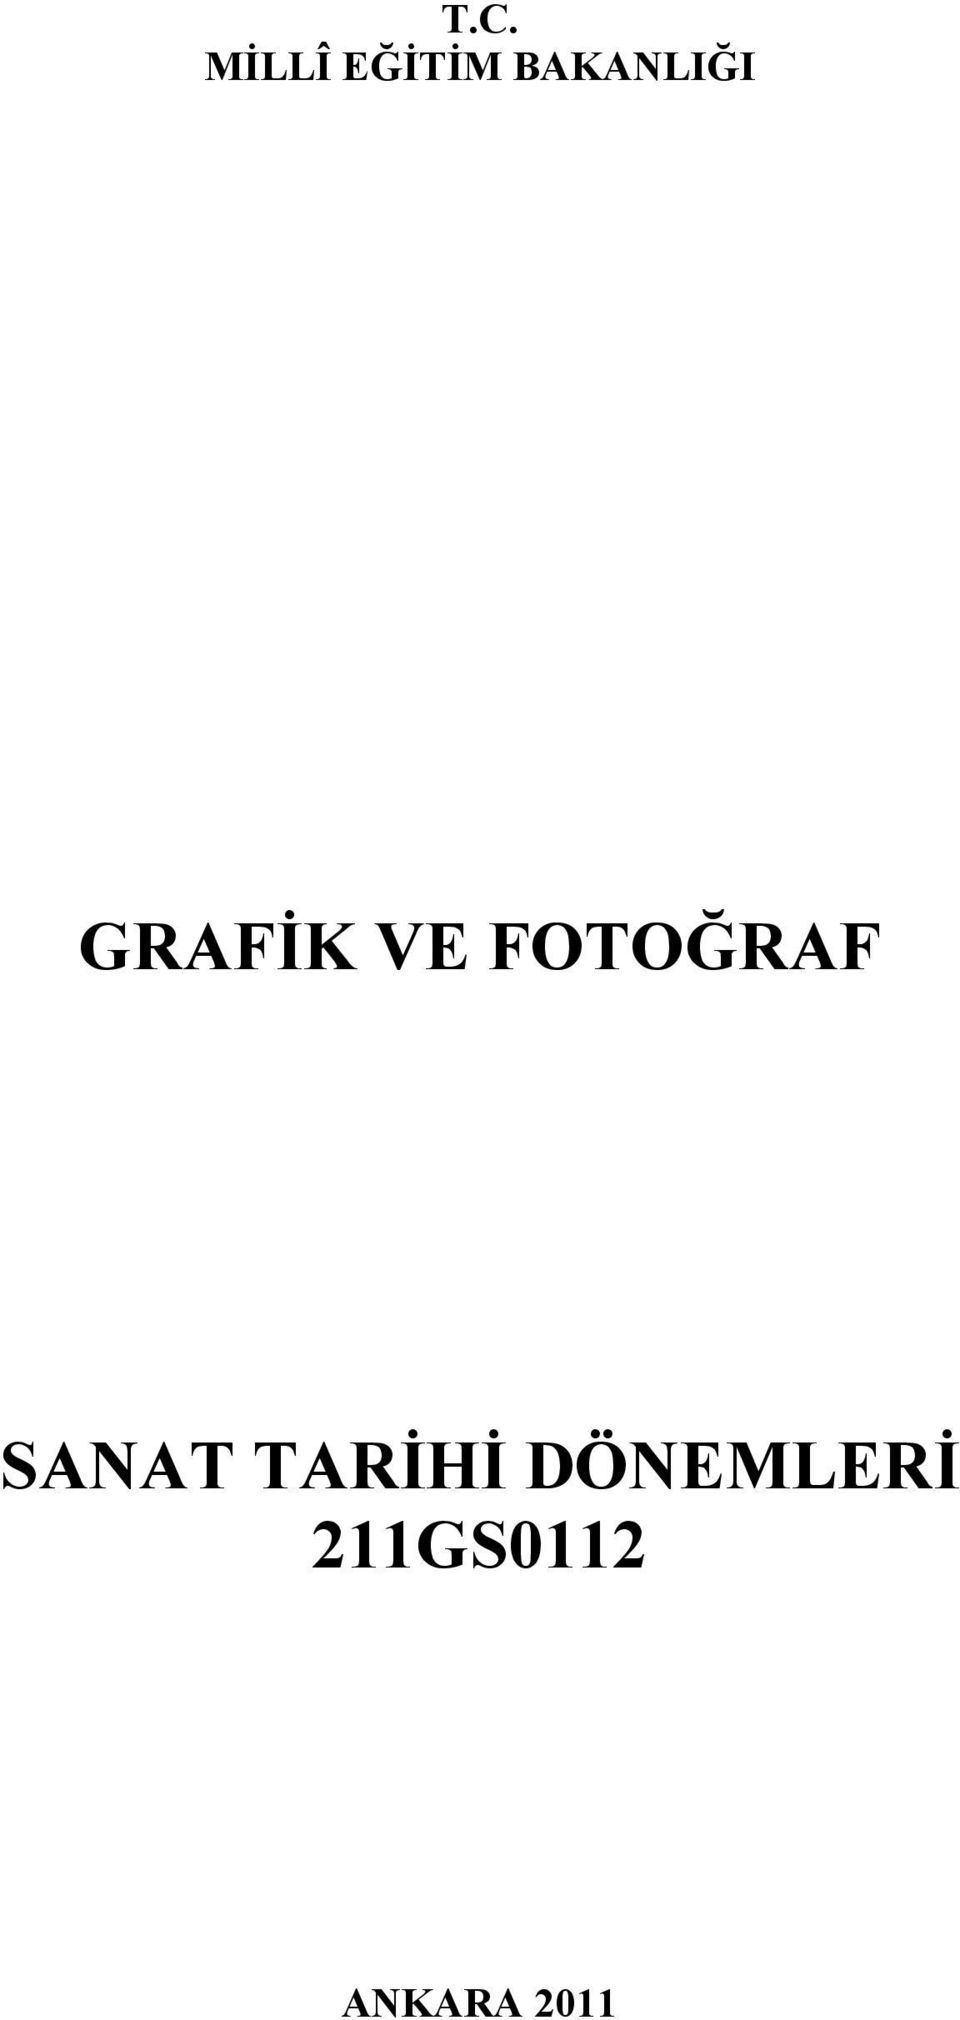 FOTOĞRAF SANAT TARİHİ